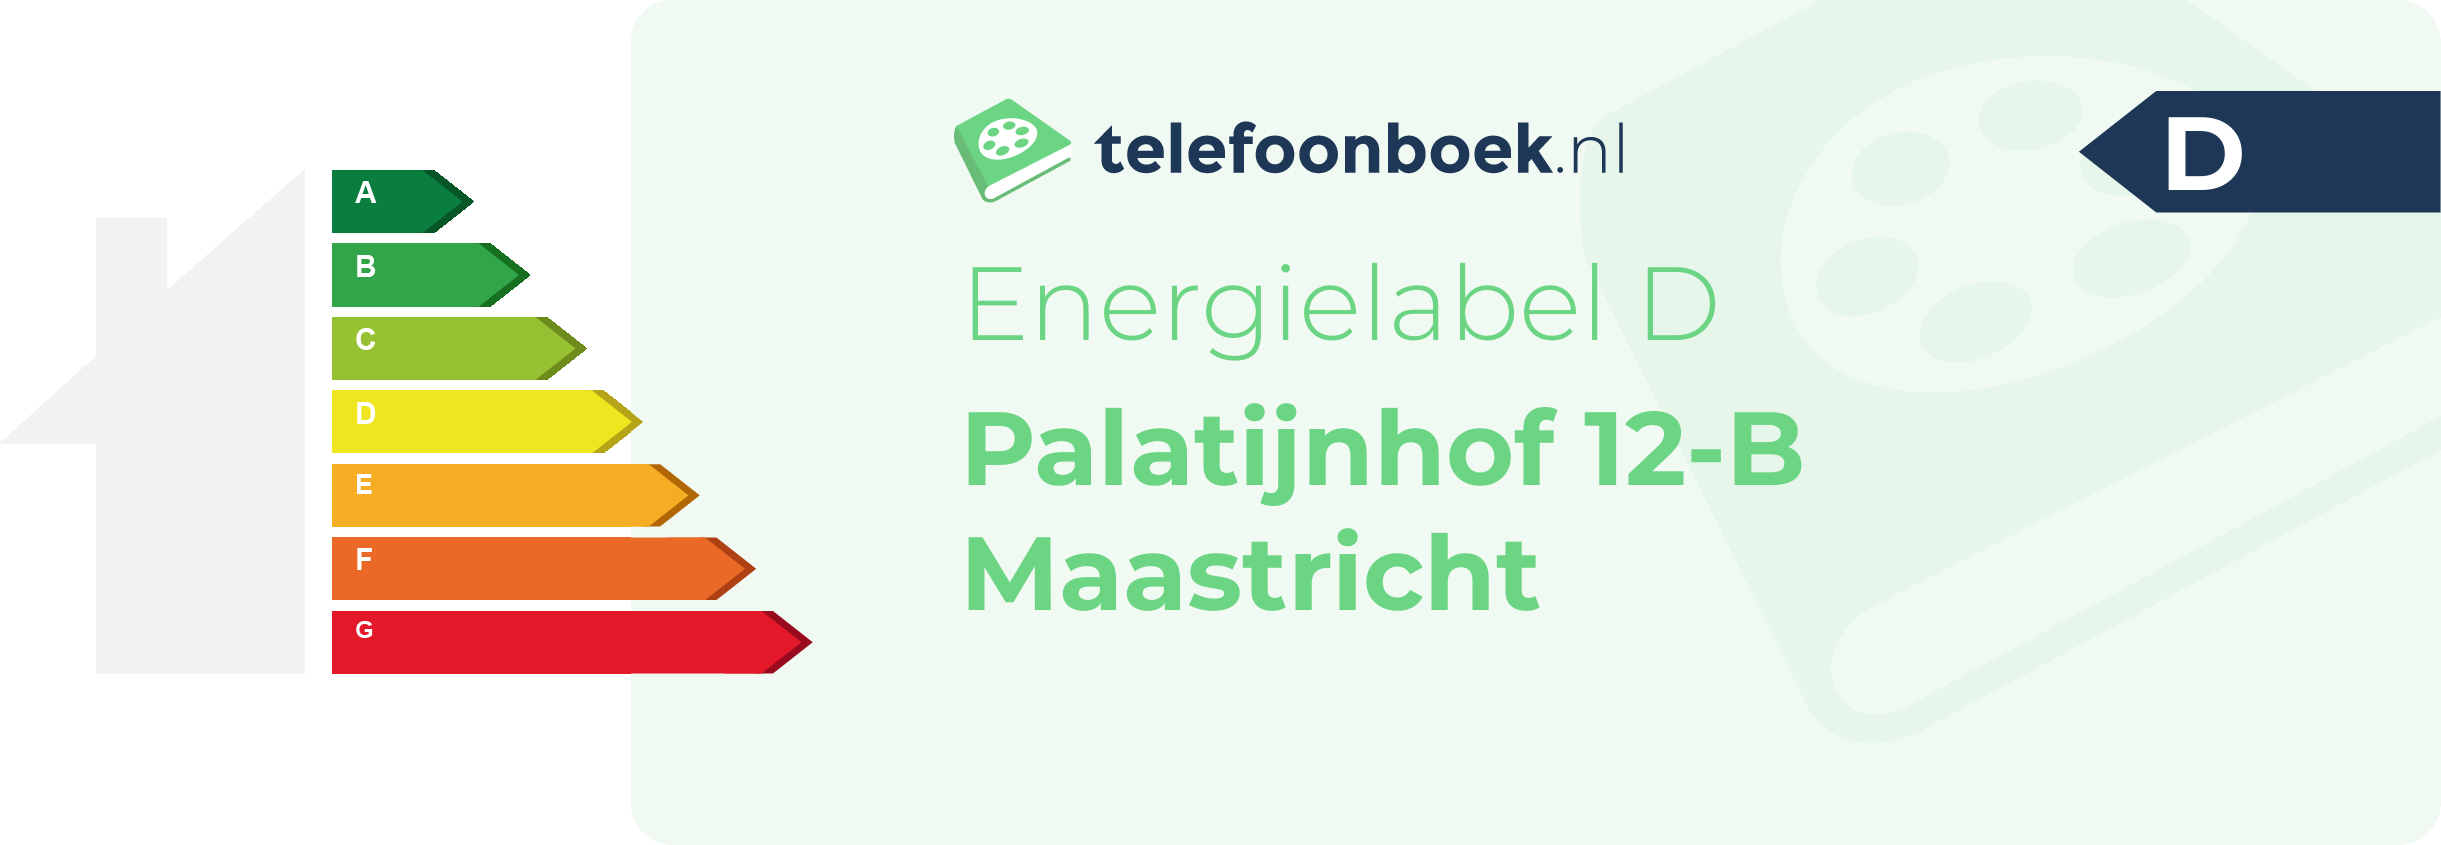 Energielabel Palatijnhof 12-B Maastricht